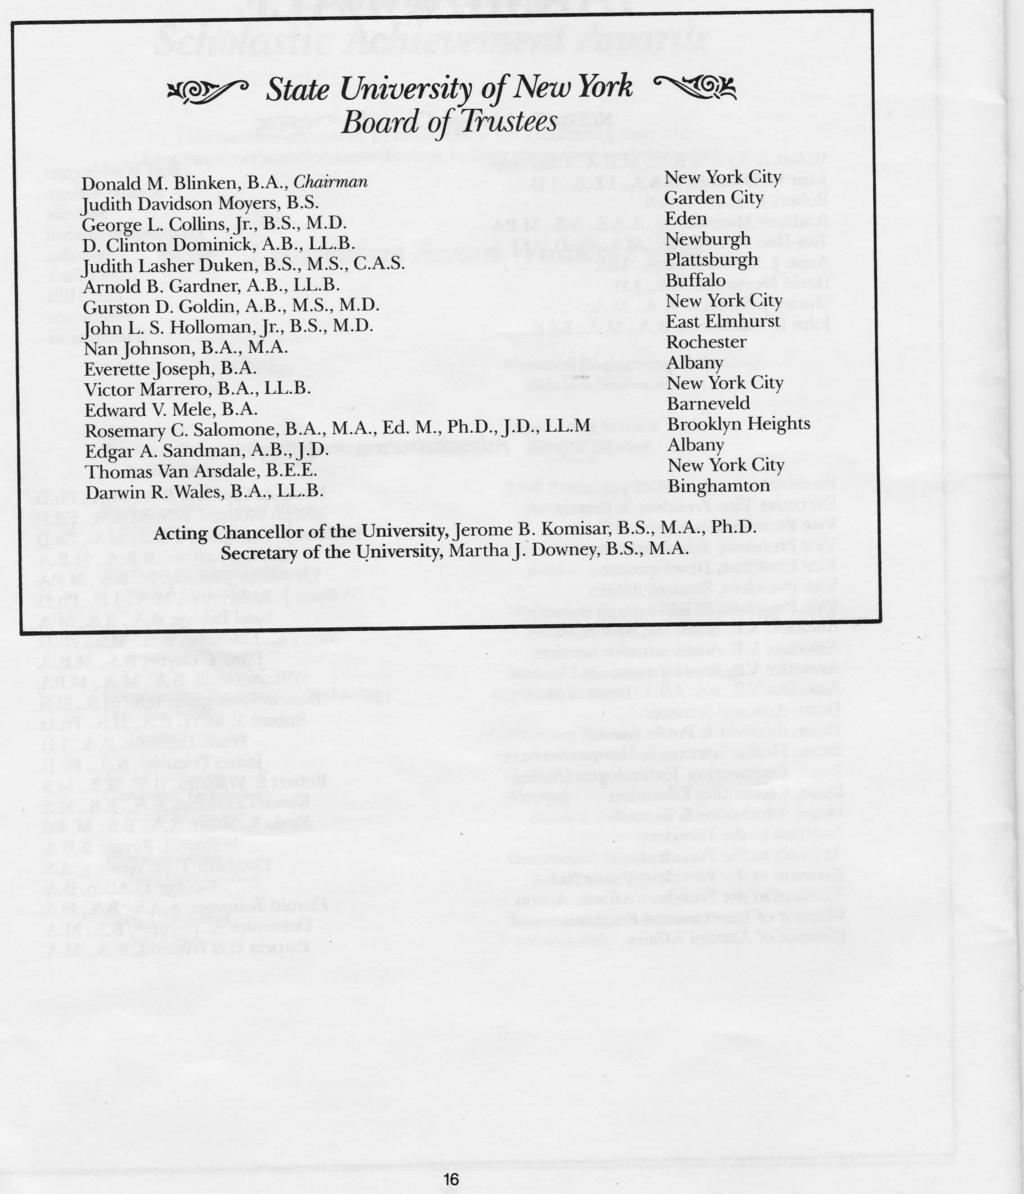 State University of New York Board of Trustees Donald M. Blinken, B.A., Chairman Judith Davidson Moyers, B.S. George L. Collins, Jr., B.S., M.D. D. Clinton Dominick, A.B., LL.B. Judith Lasher Duken, B.